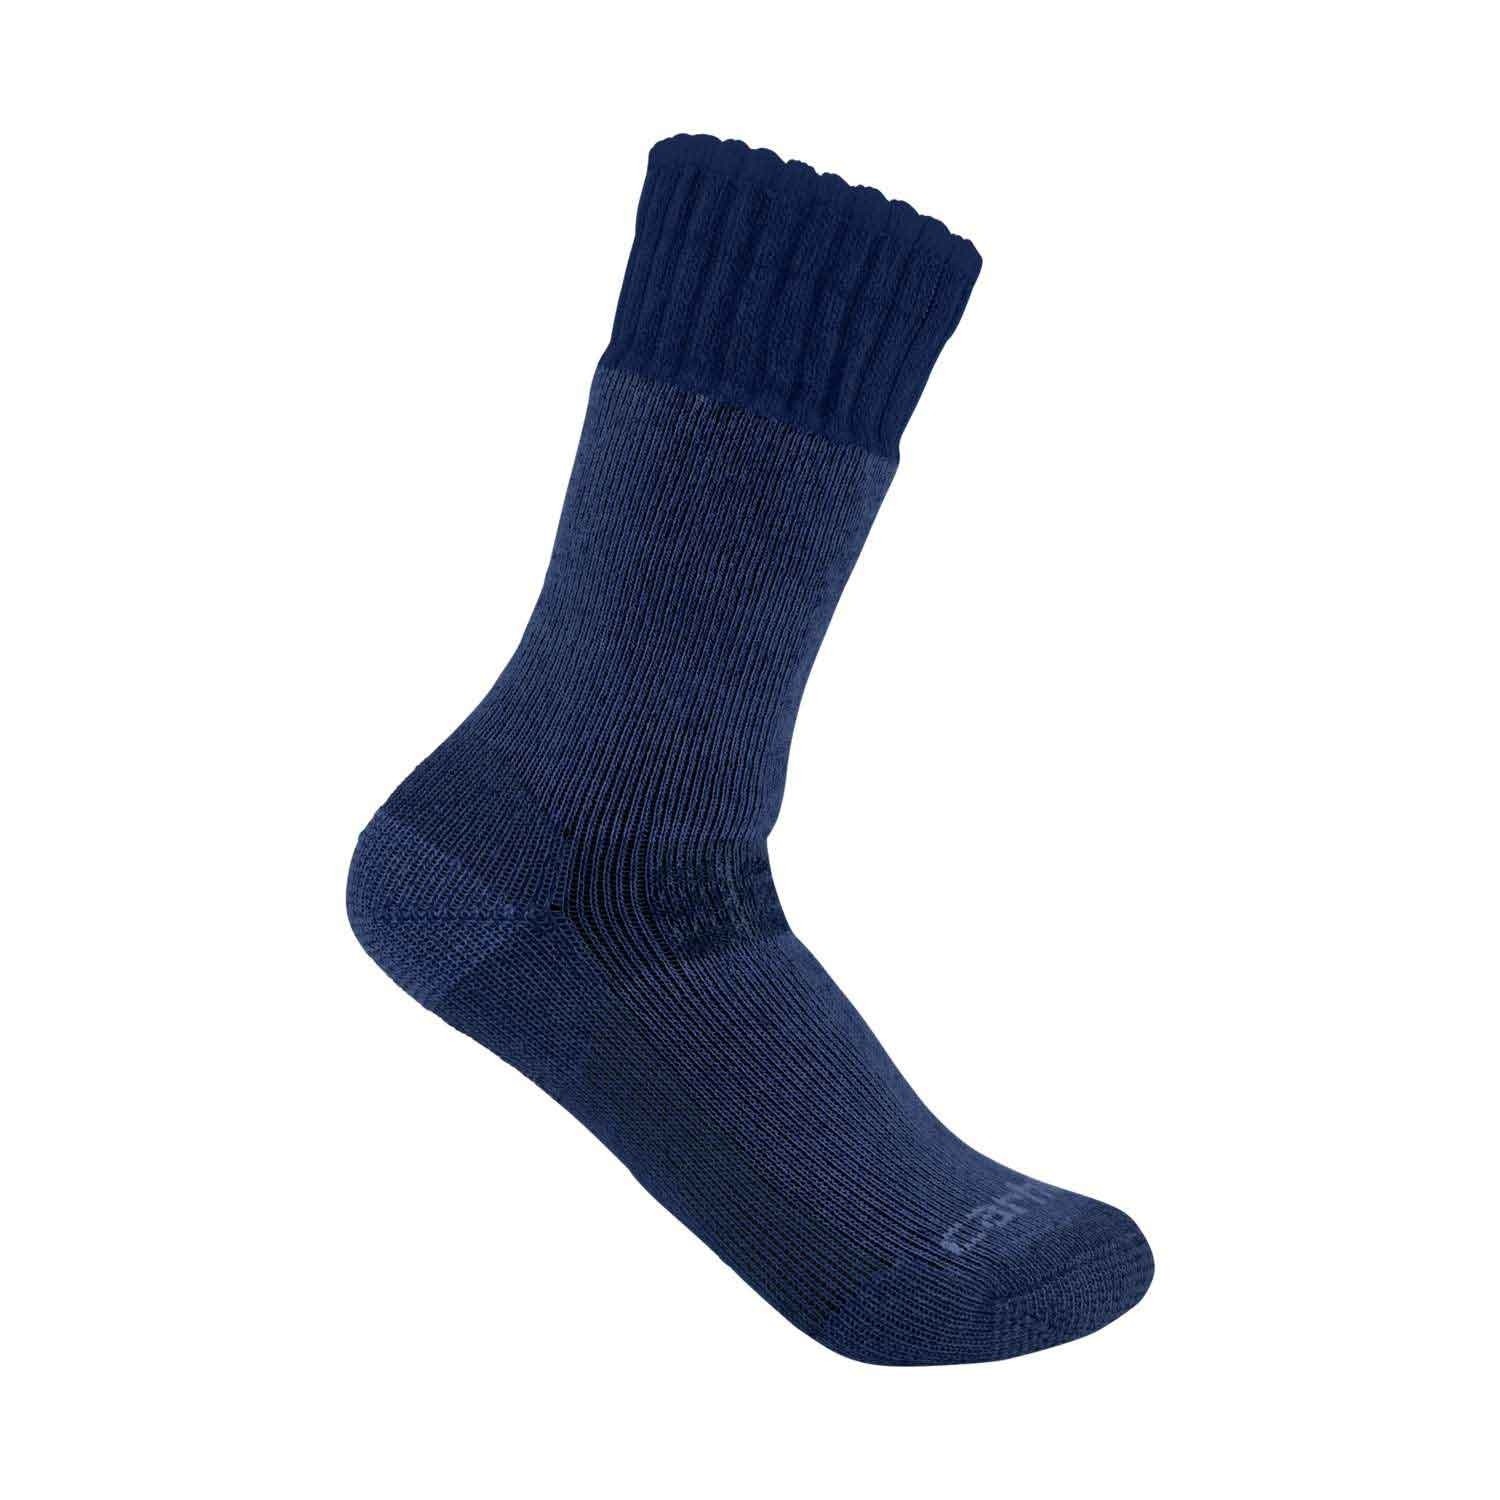 Carhartt Heavyweight Synthetic-Wool Blend Boot Sock : Navy